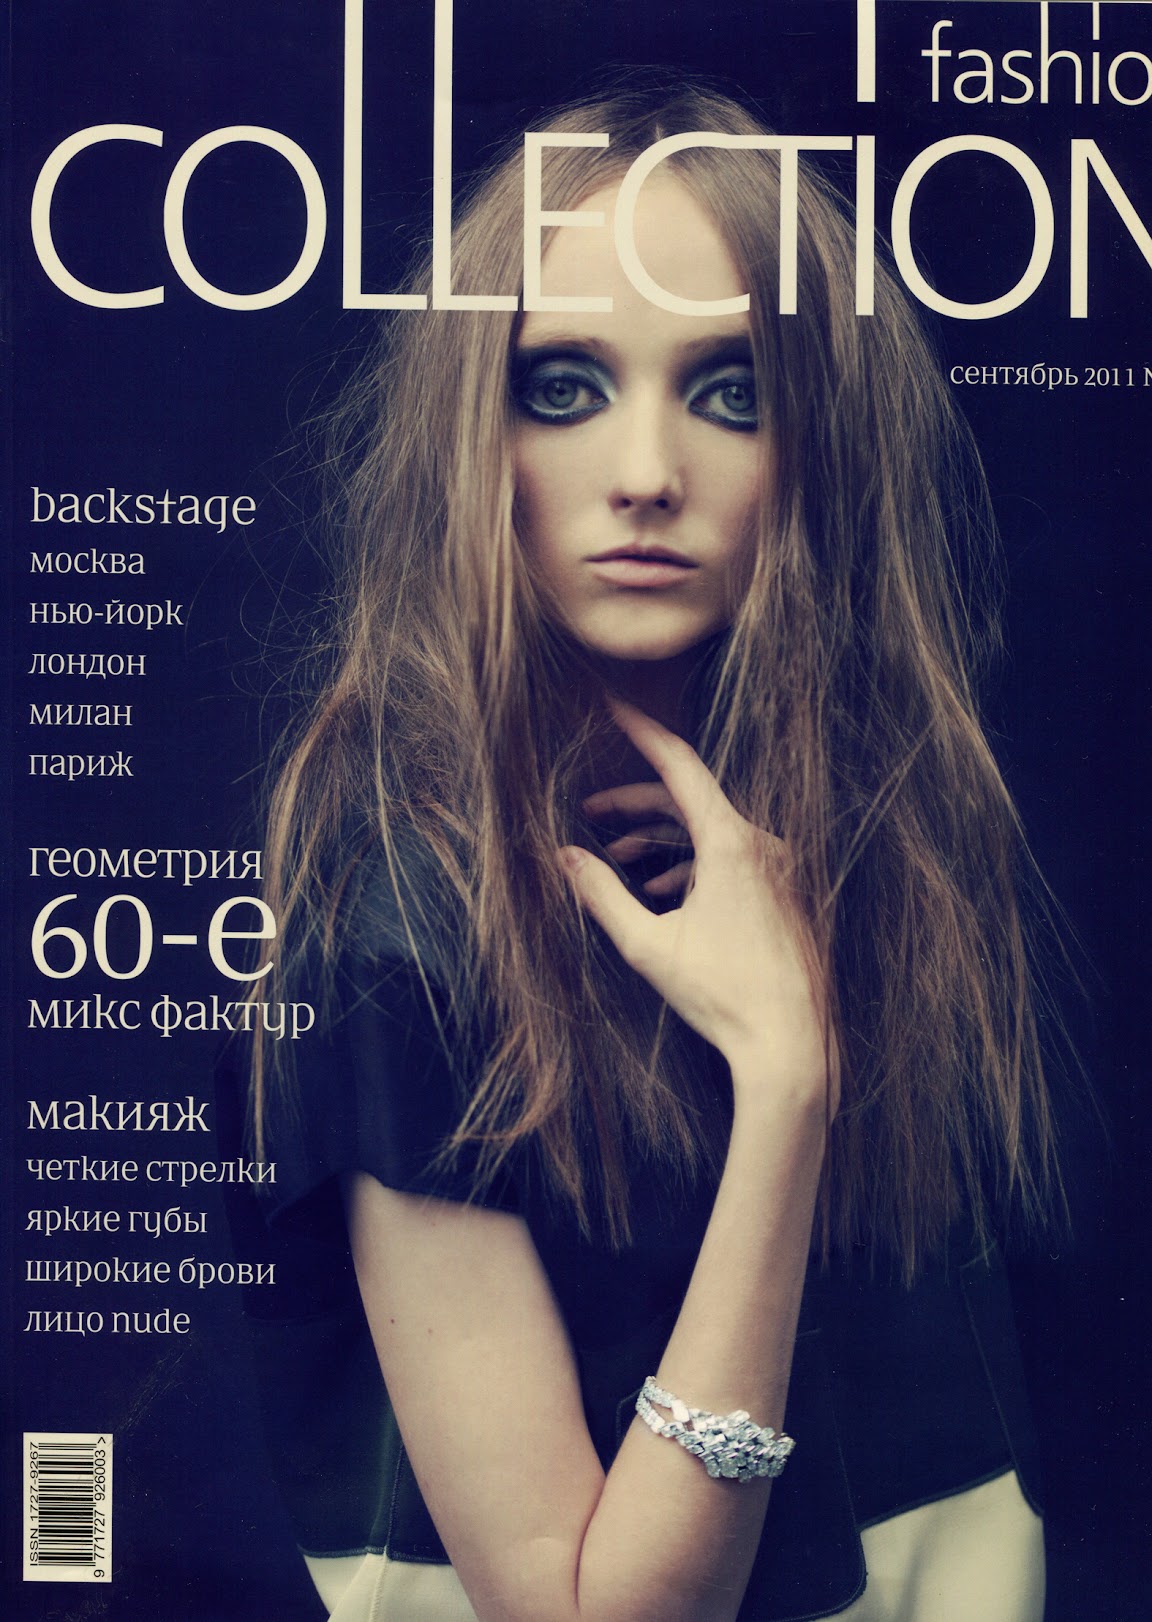 Collection журнал. Журнал Fashion collection. Страницы модных журналов. Журнал моды Fashion collection. Обложки журналов моды.